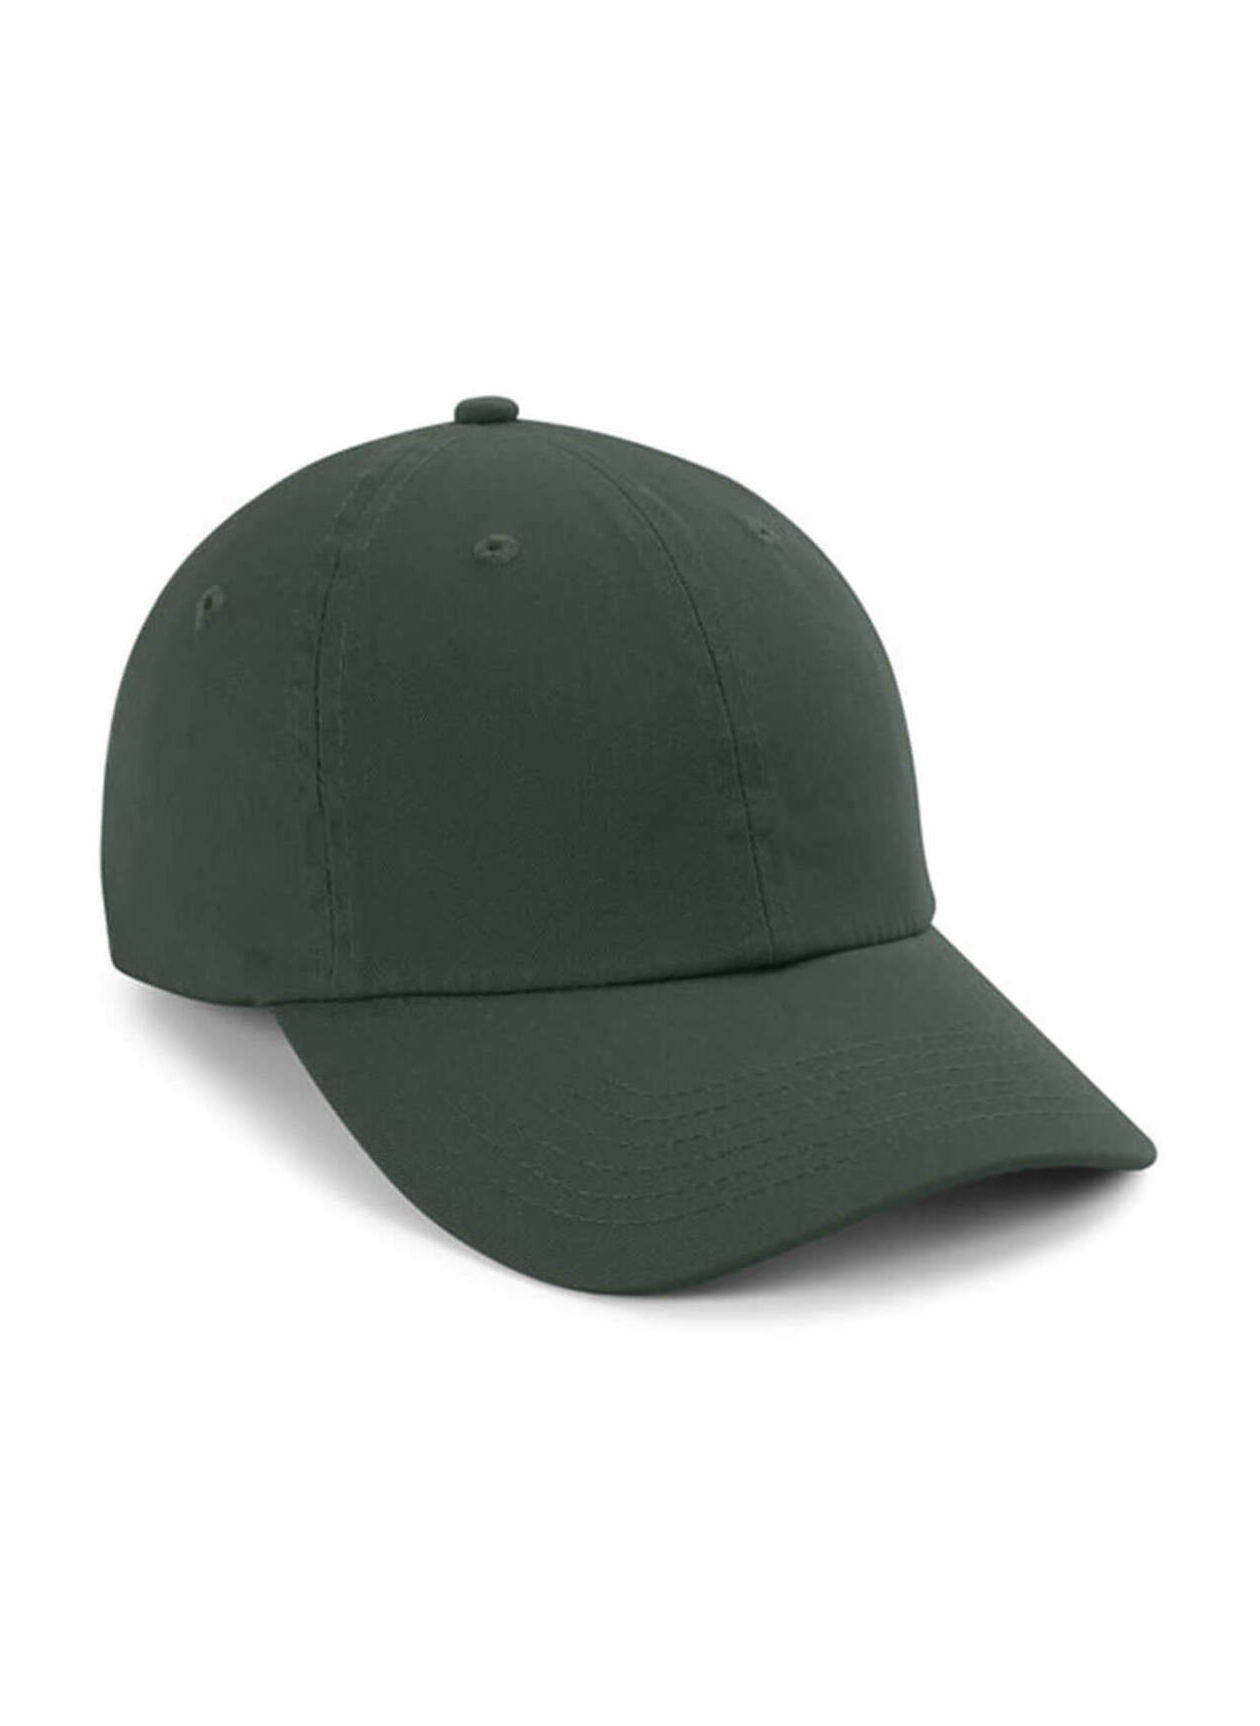 Imperial Dark Green The Original Buckle Hat